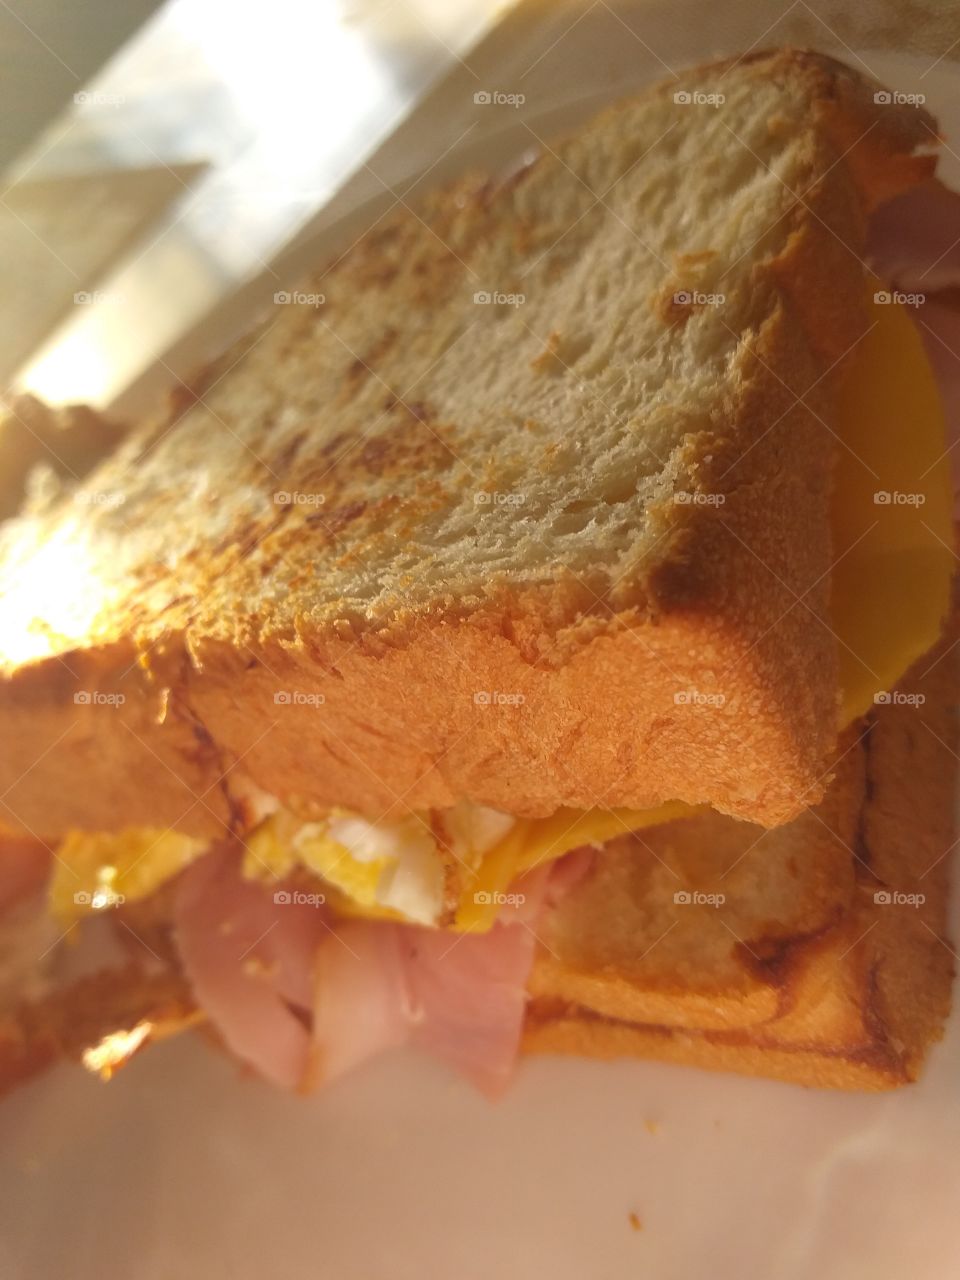 My egg sandwich